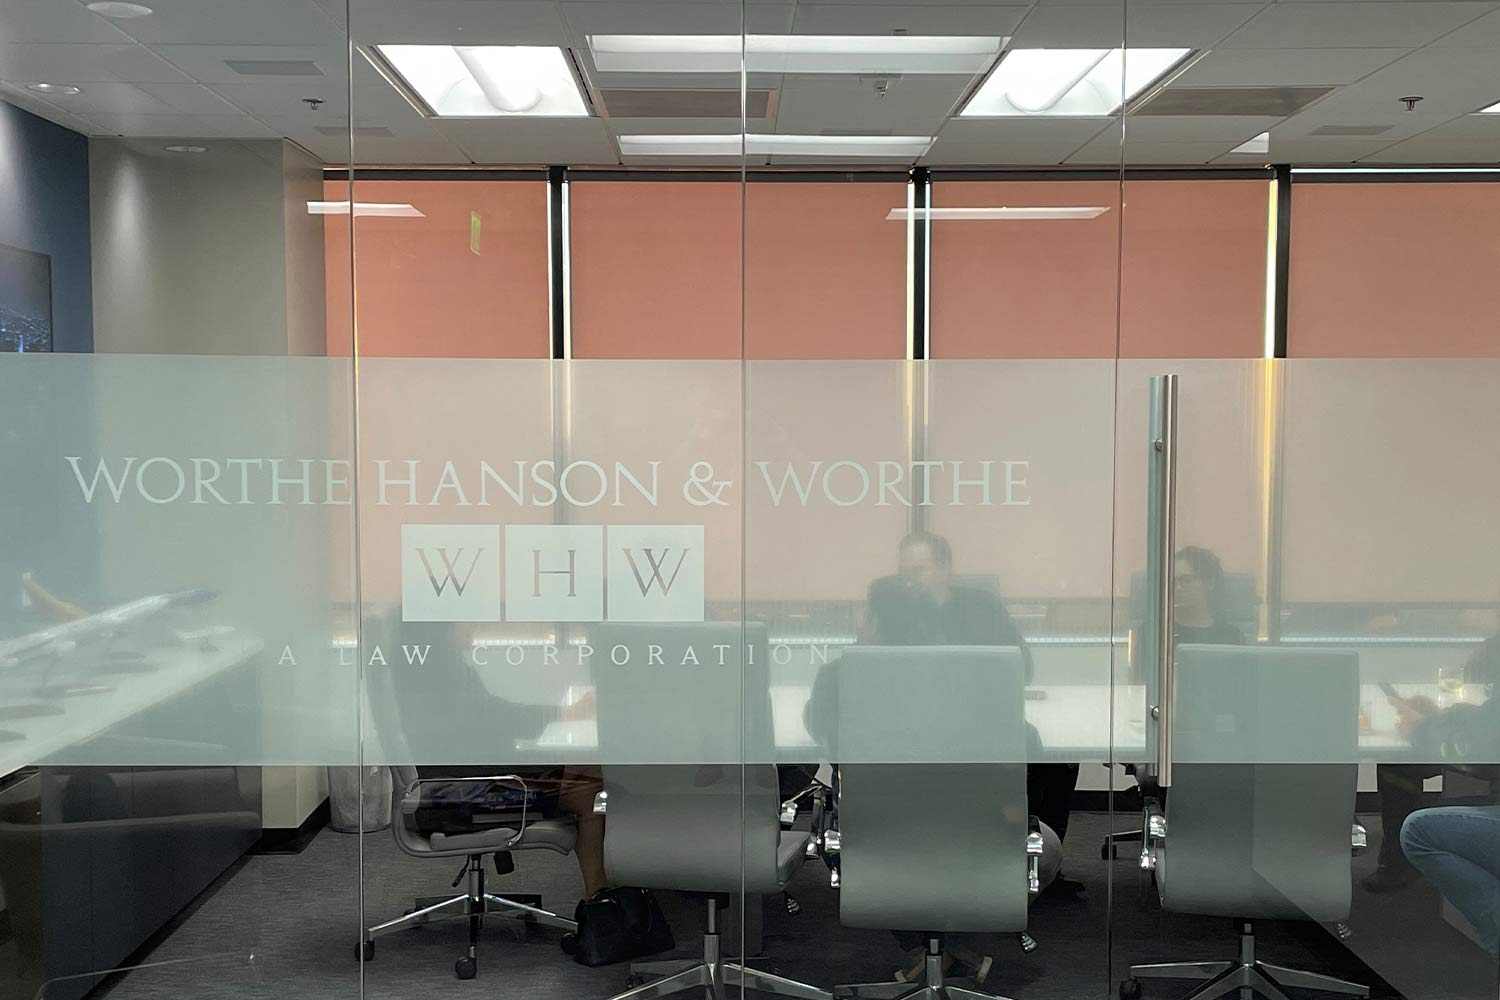 Inside the office of Worthe Hanson & Worthe